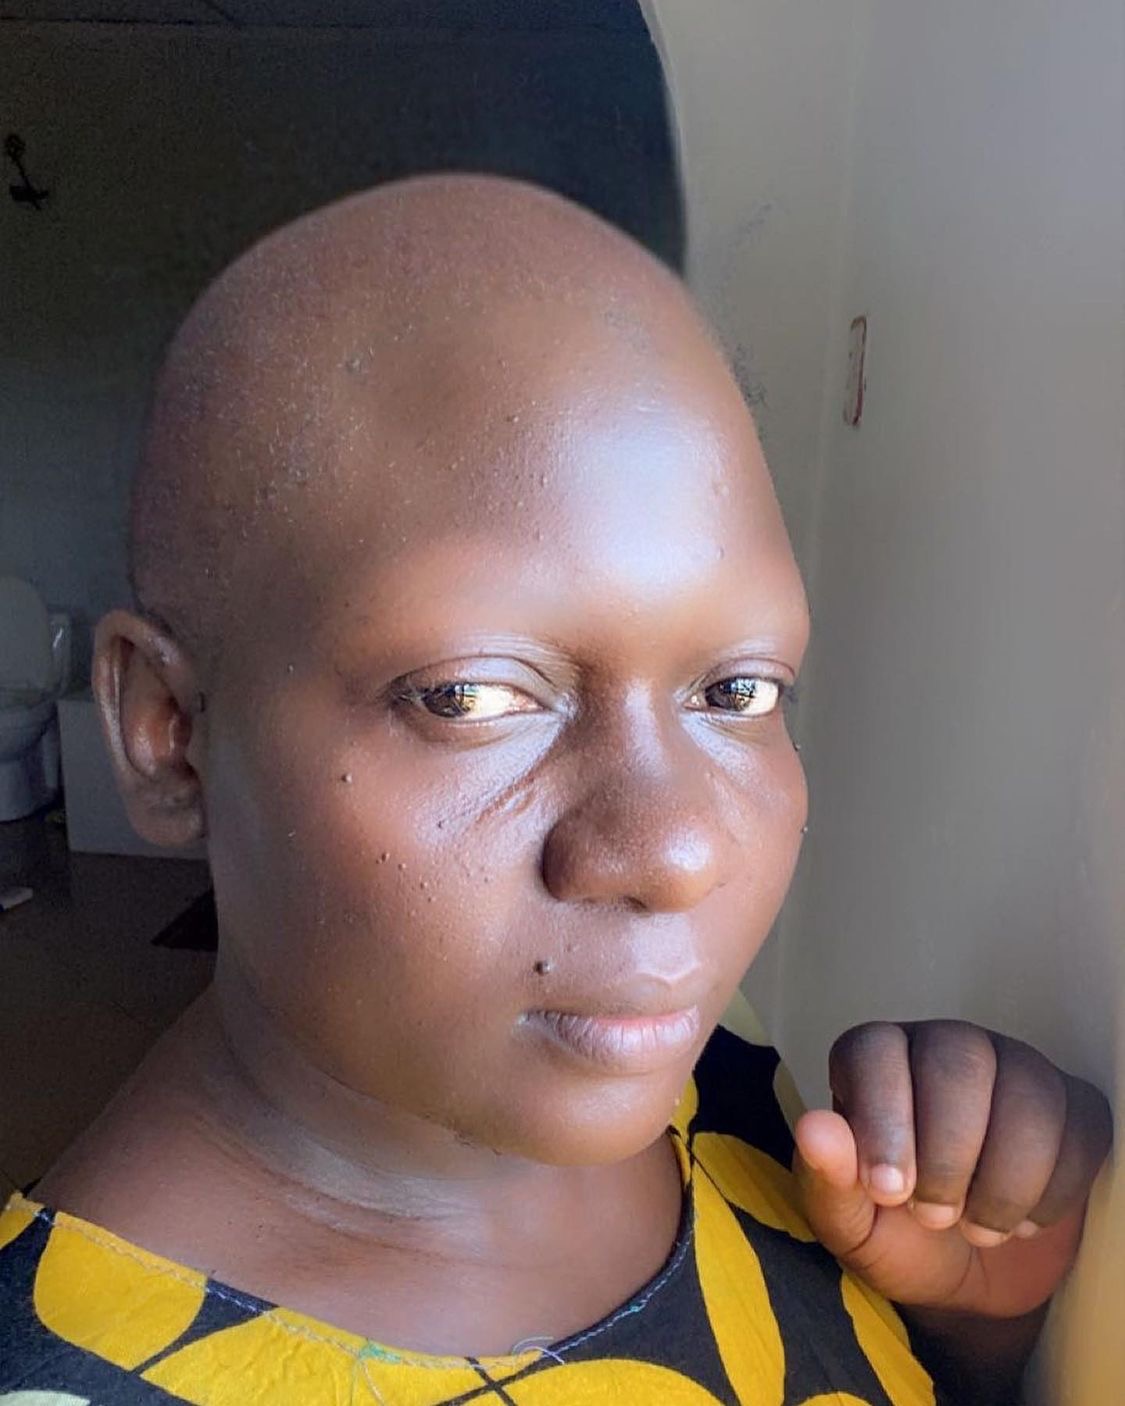 Bald is beautiful: Nyota Ndogo explains reasons behind her bold bald new look